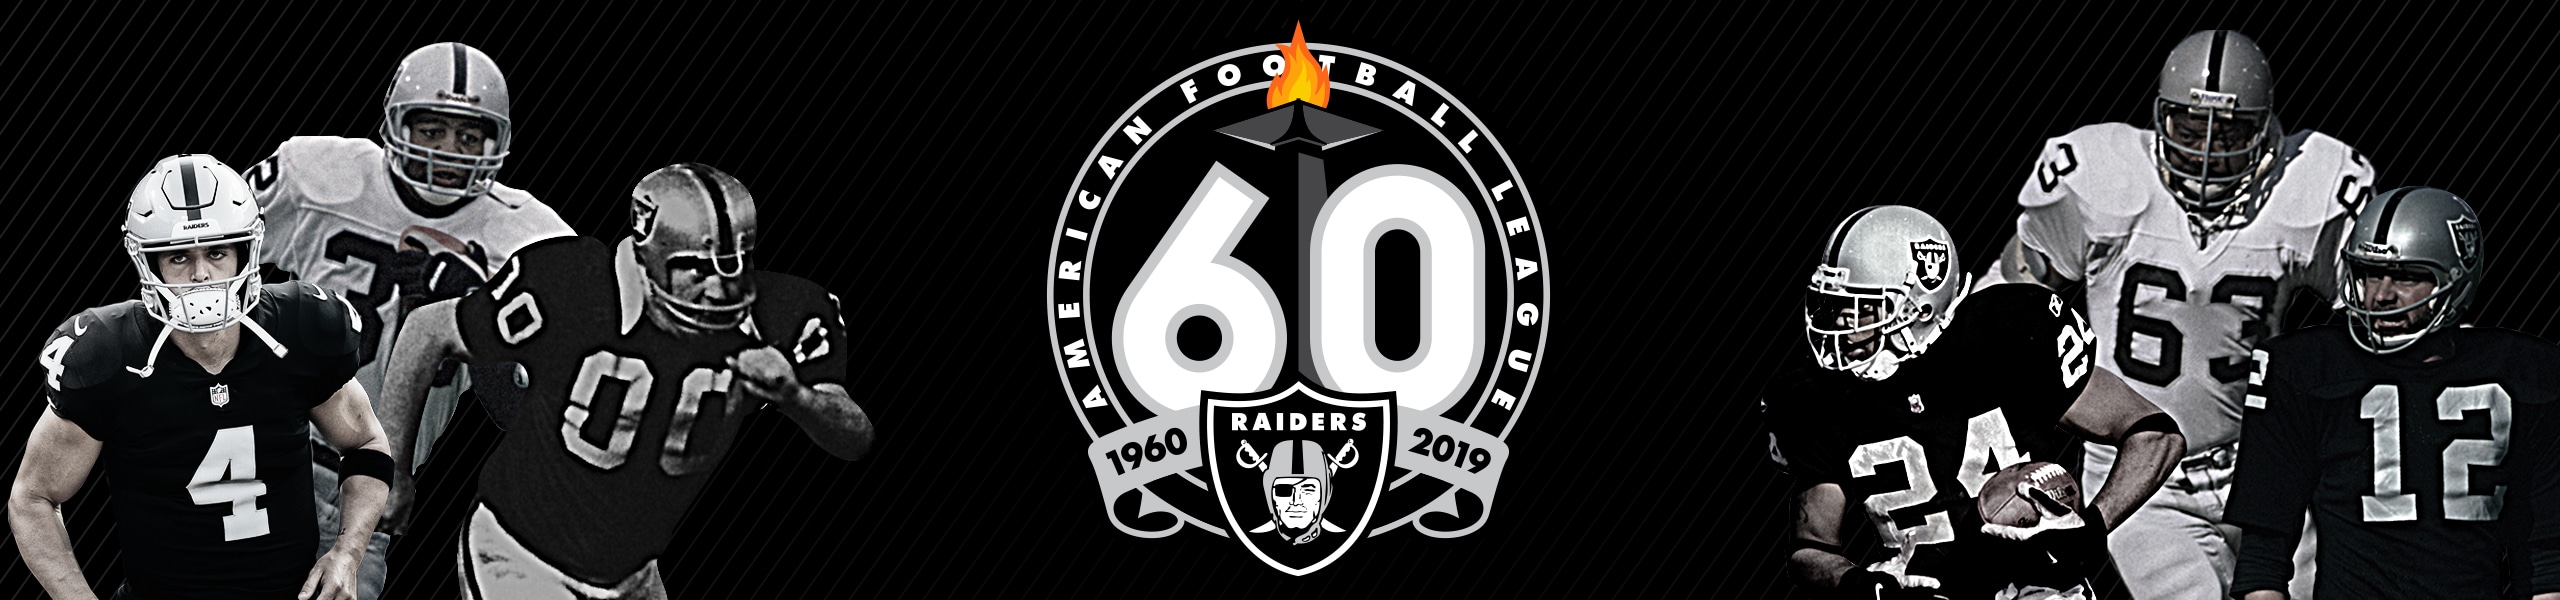 Oakland Raiders 60th Anniversary - HD Wallpaper 